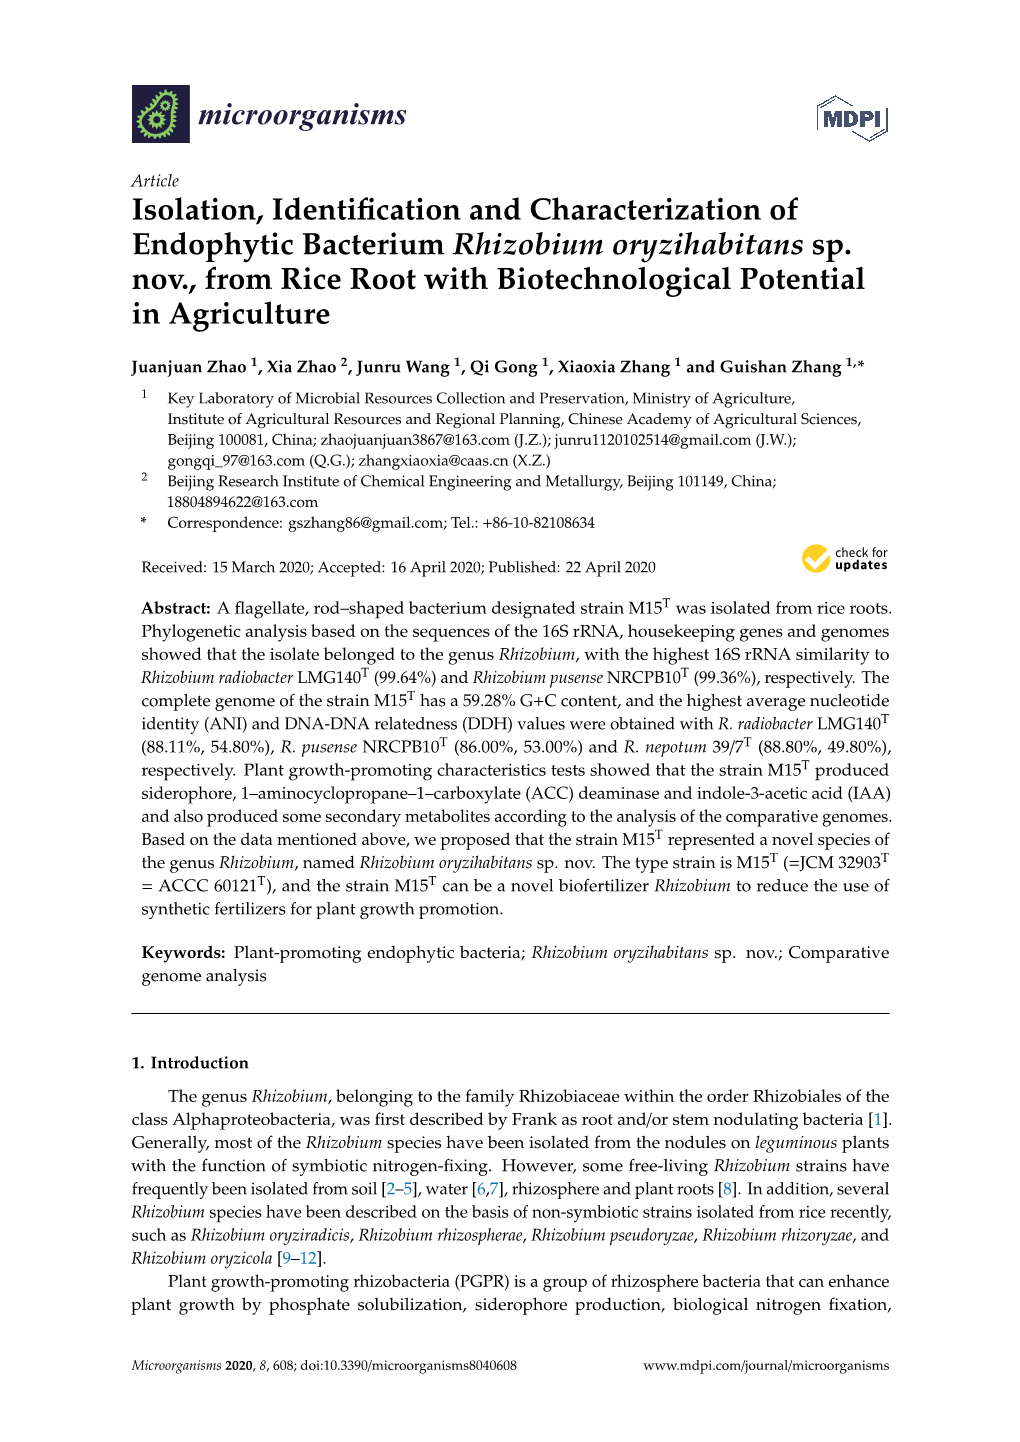 Isolation, Identification and Characterization of Endophytic